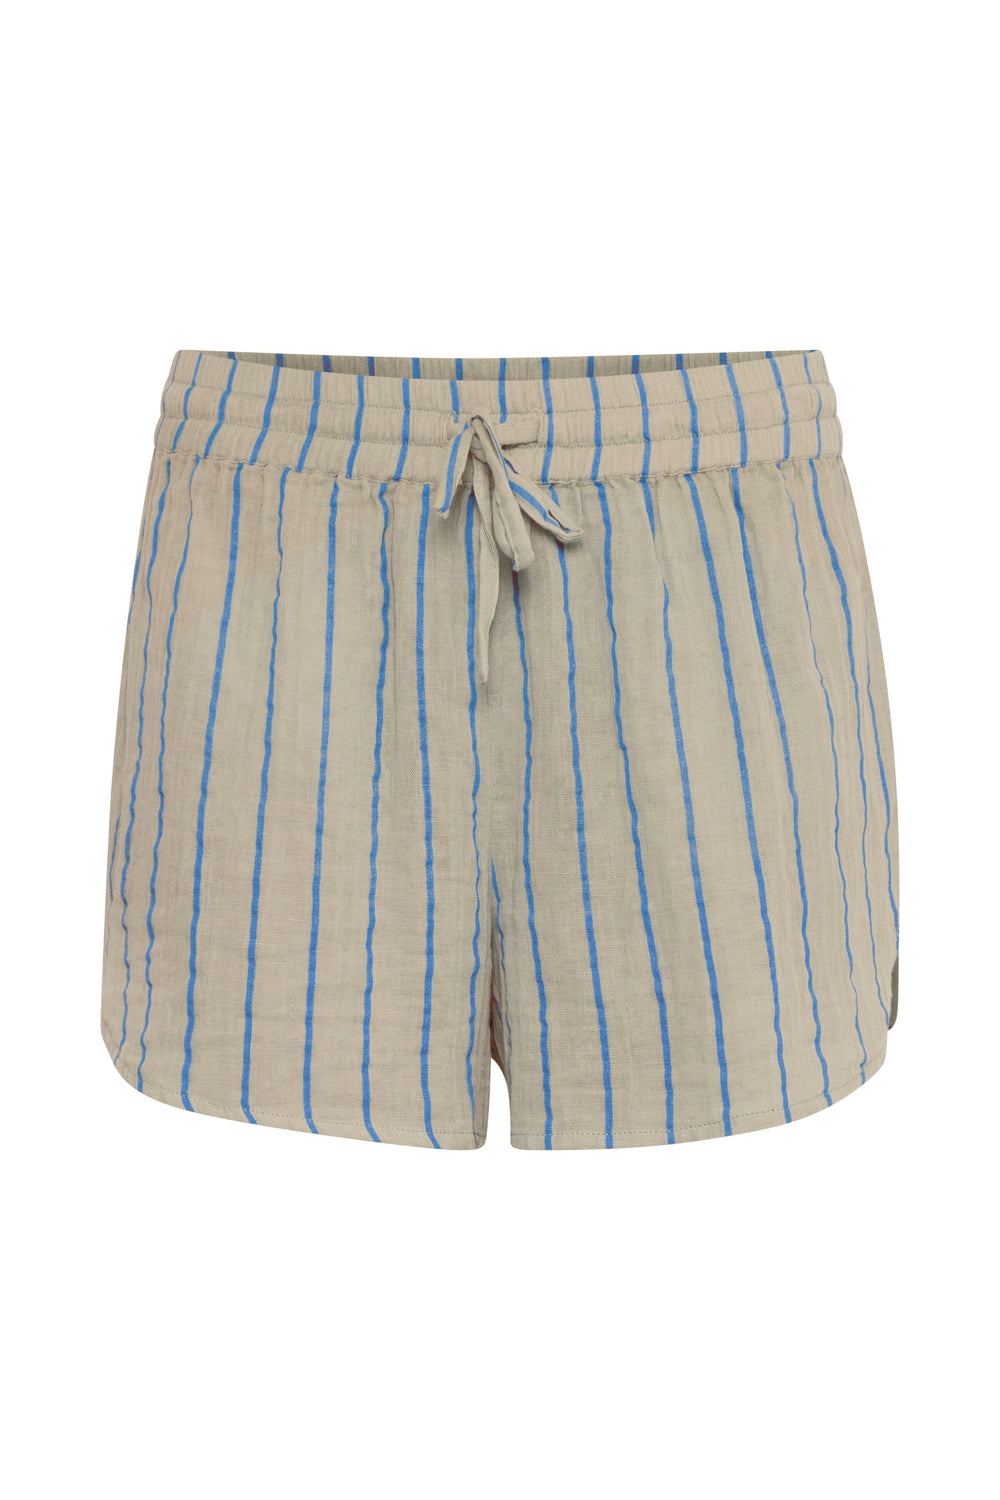 Ichi - Iafoxa Striped Beach Sho - 203320 Doeskin/Della Blue Stripe Shorts 